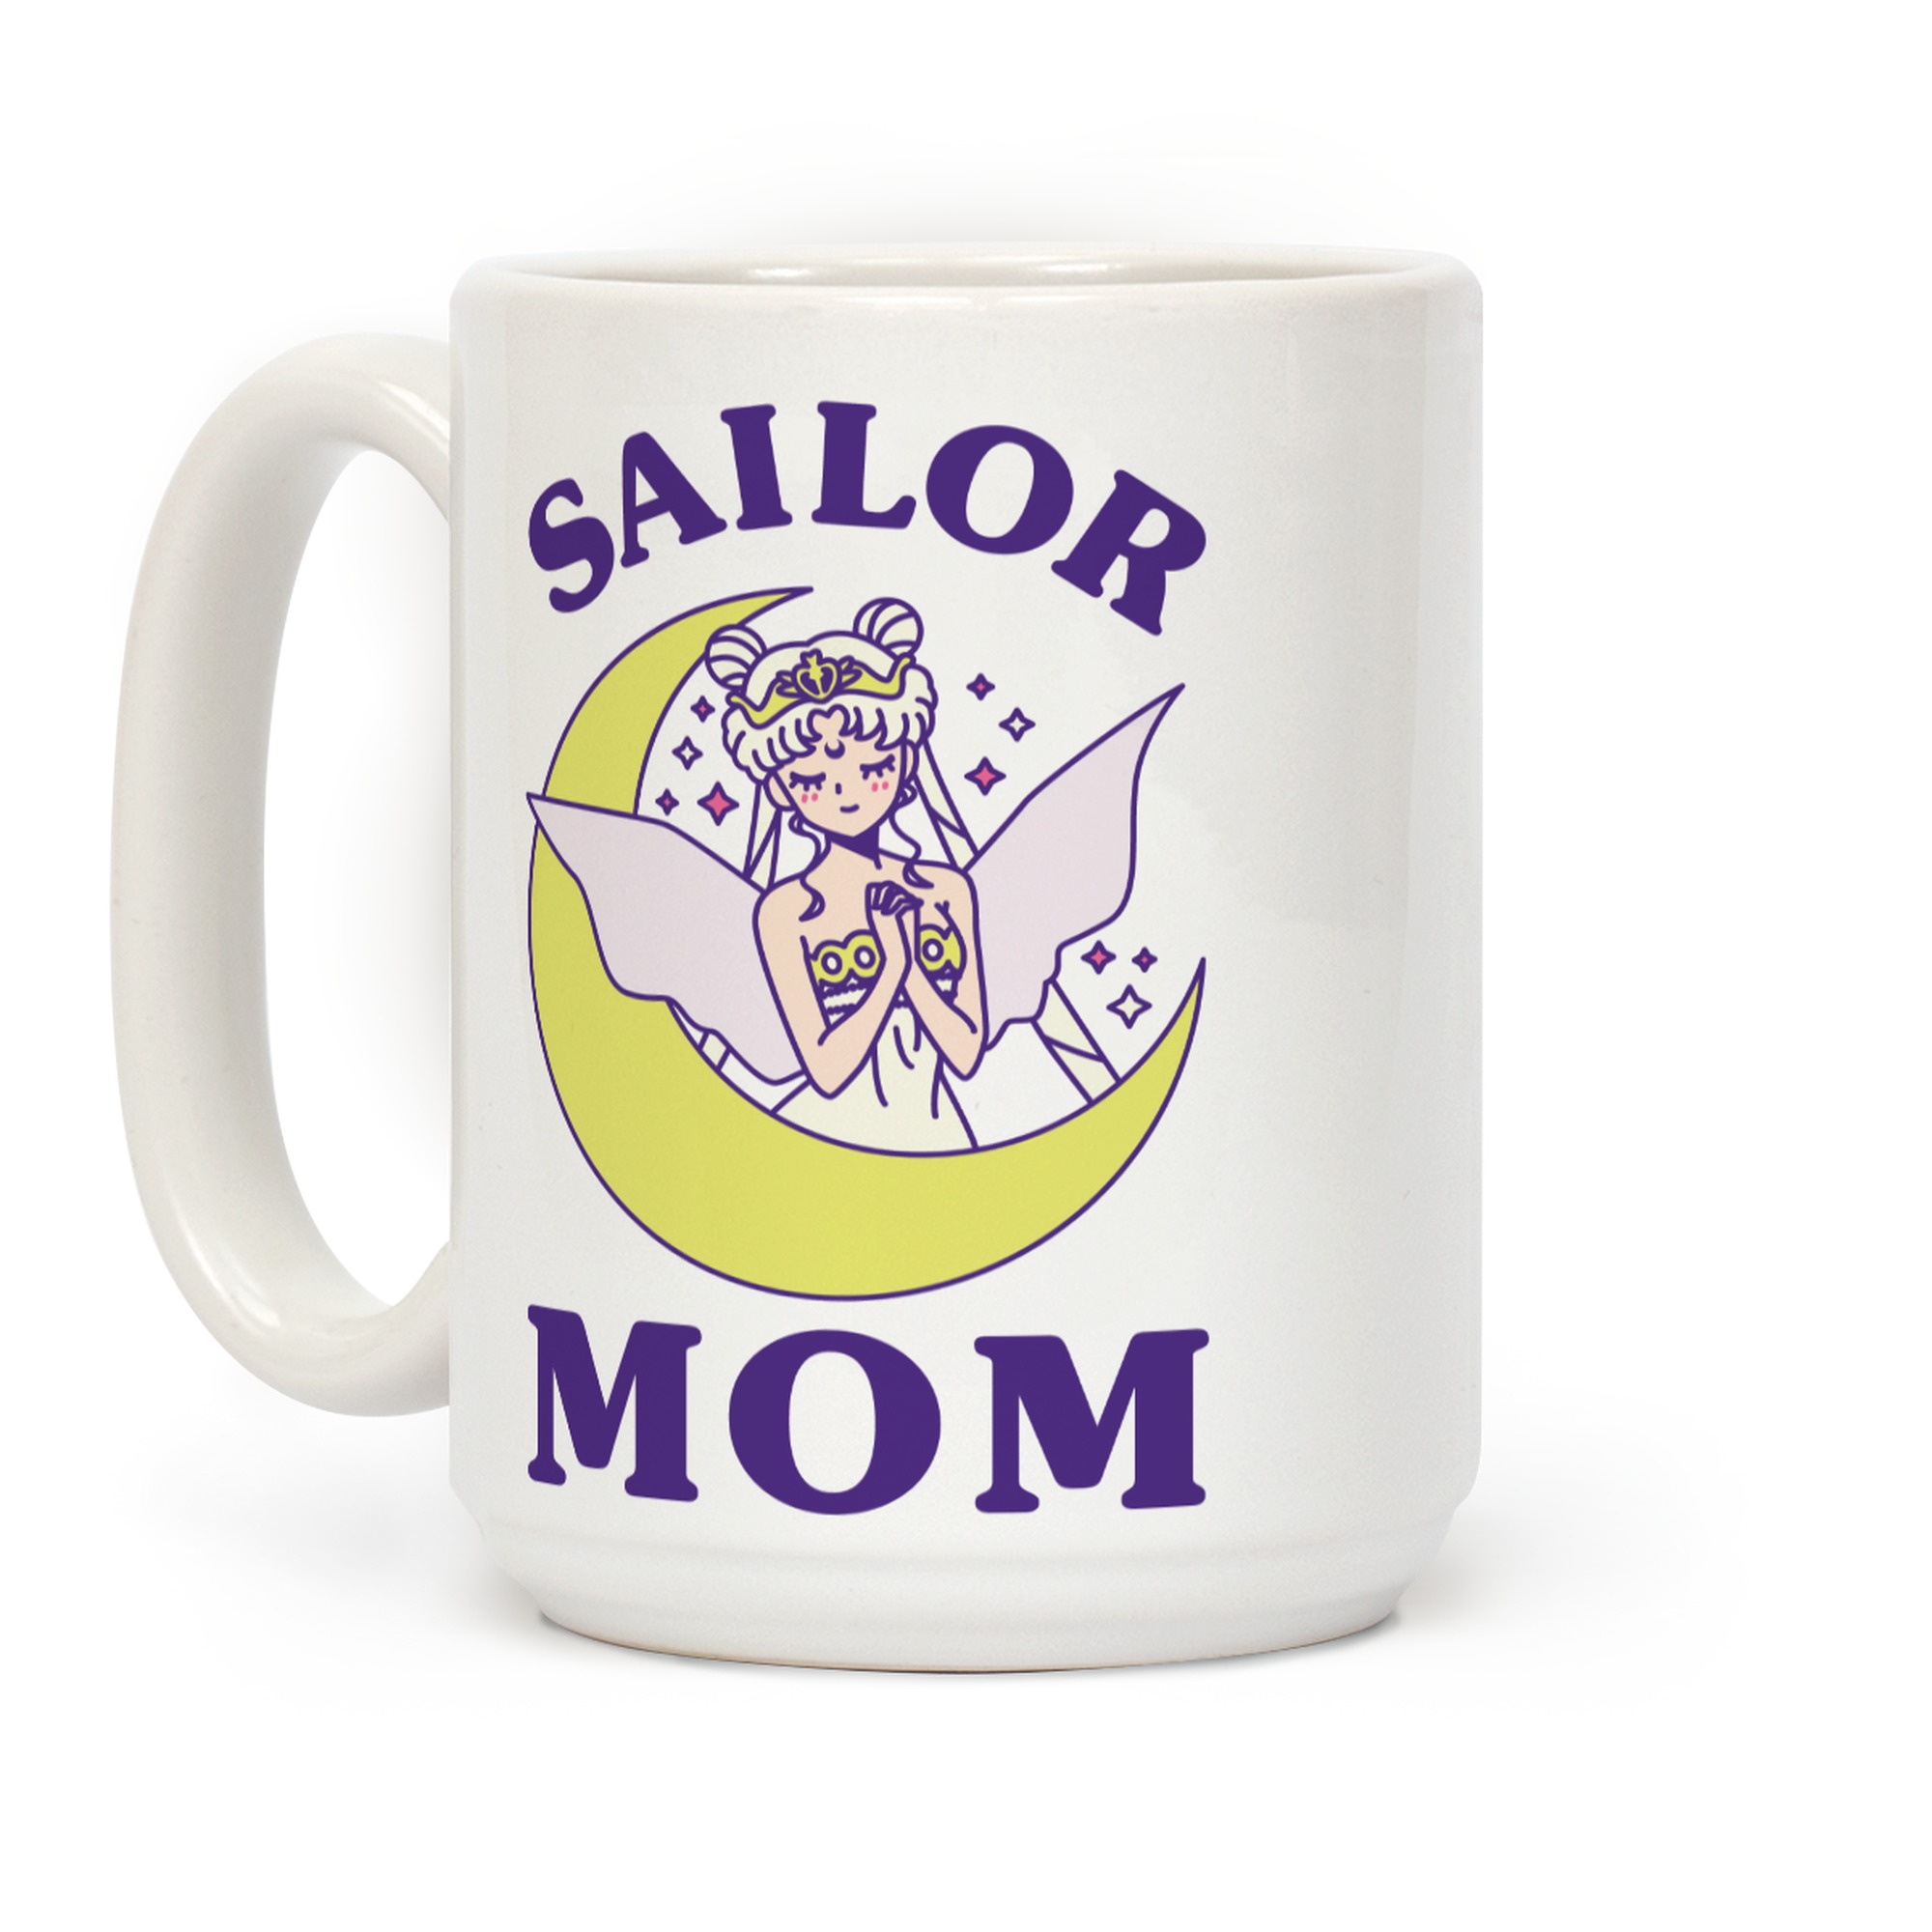 mom coffee mugs